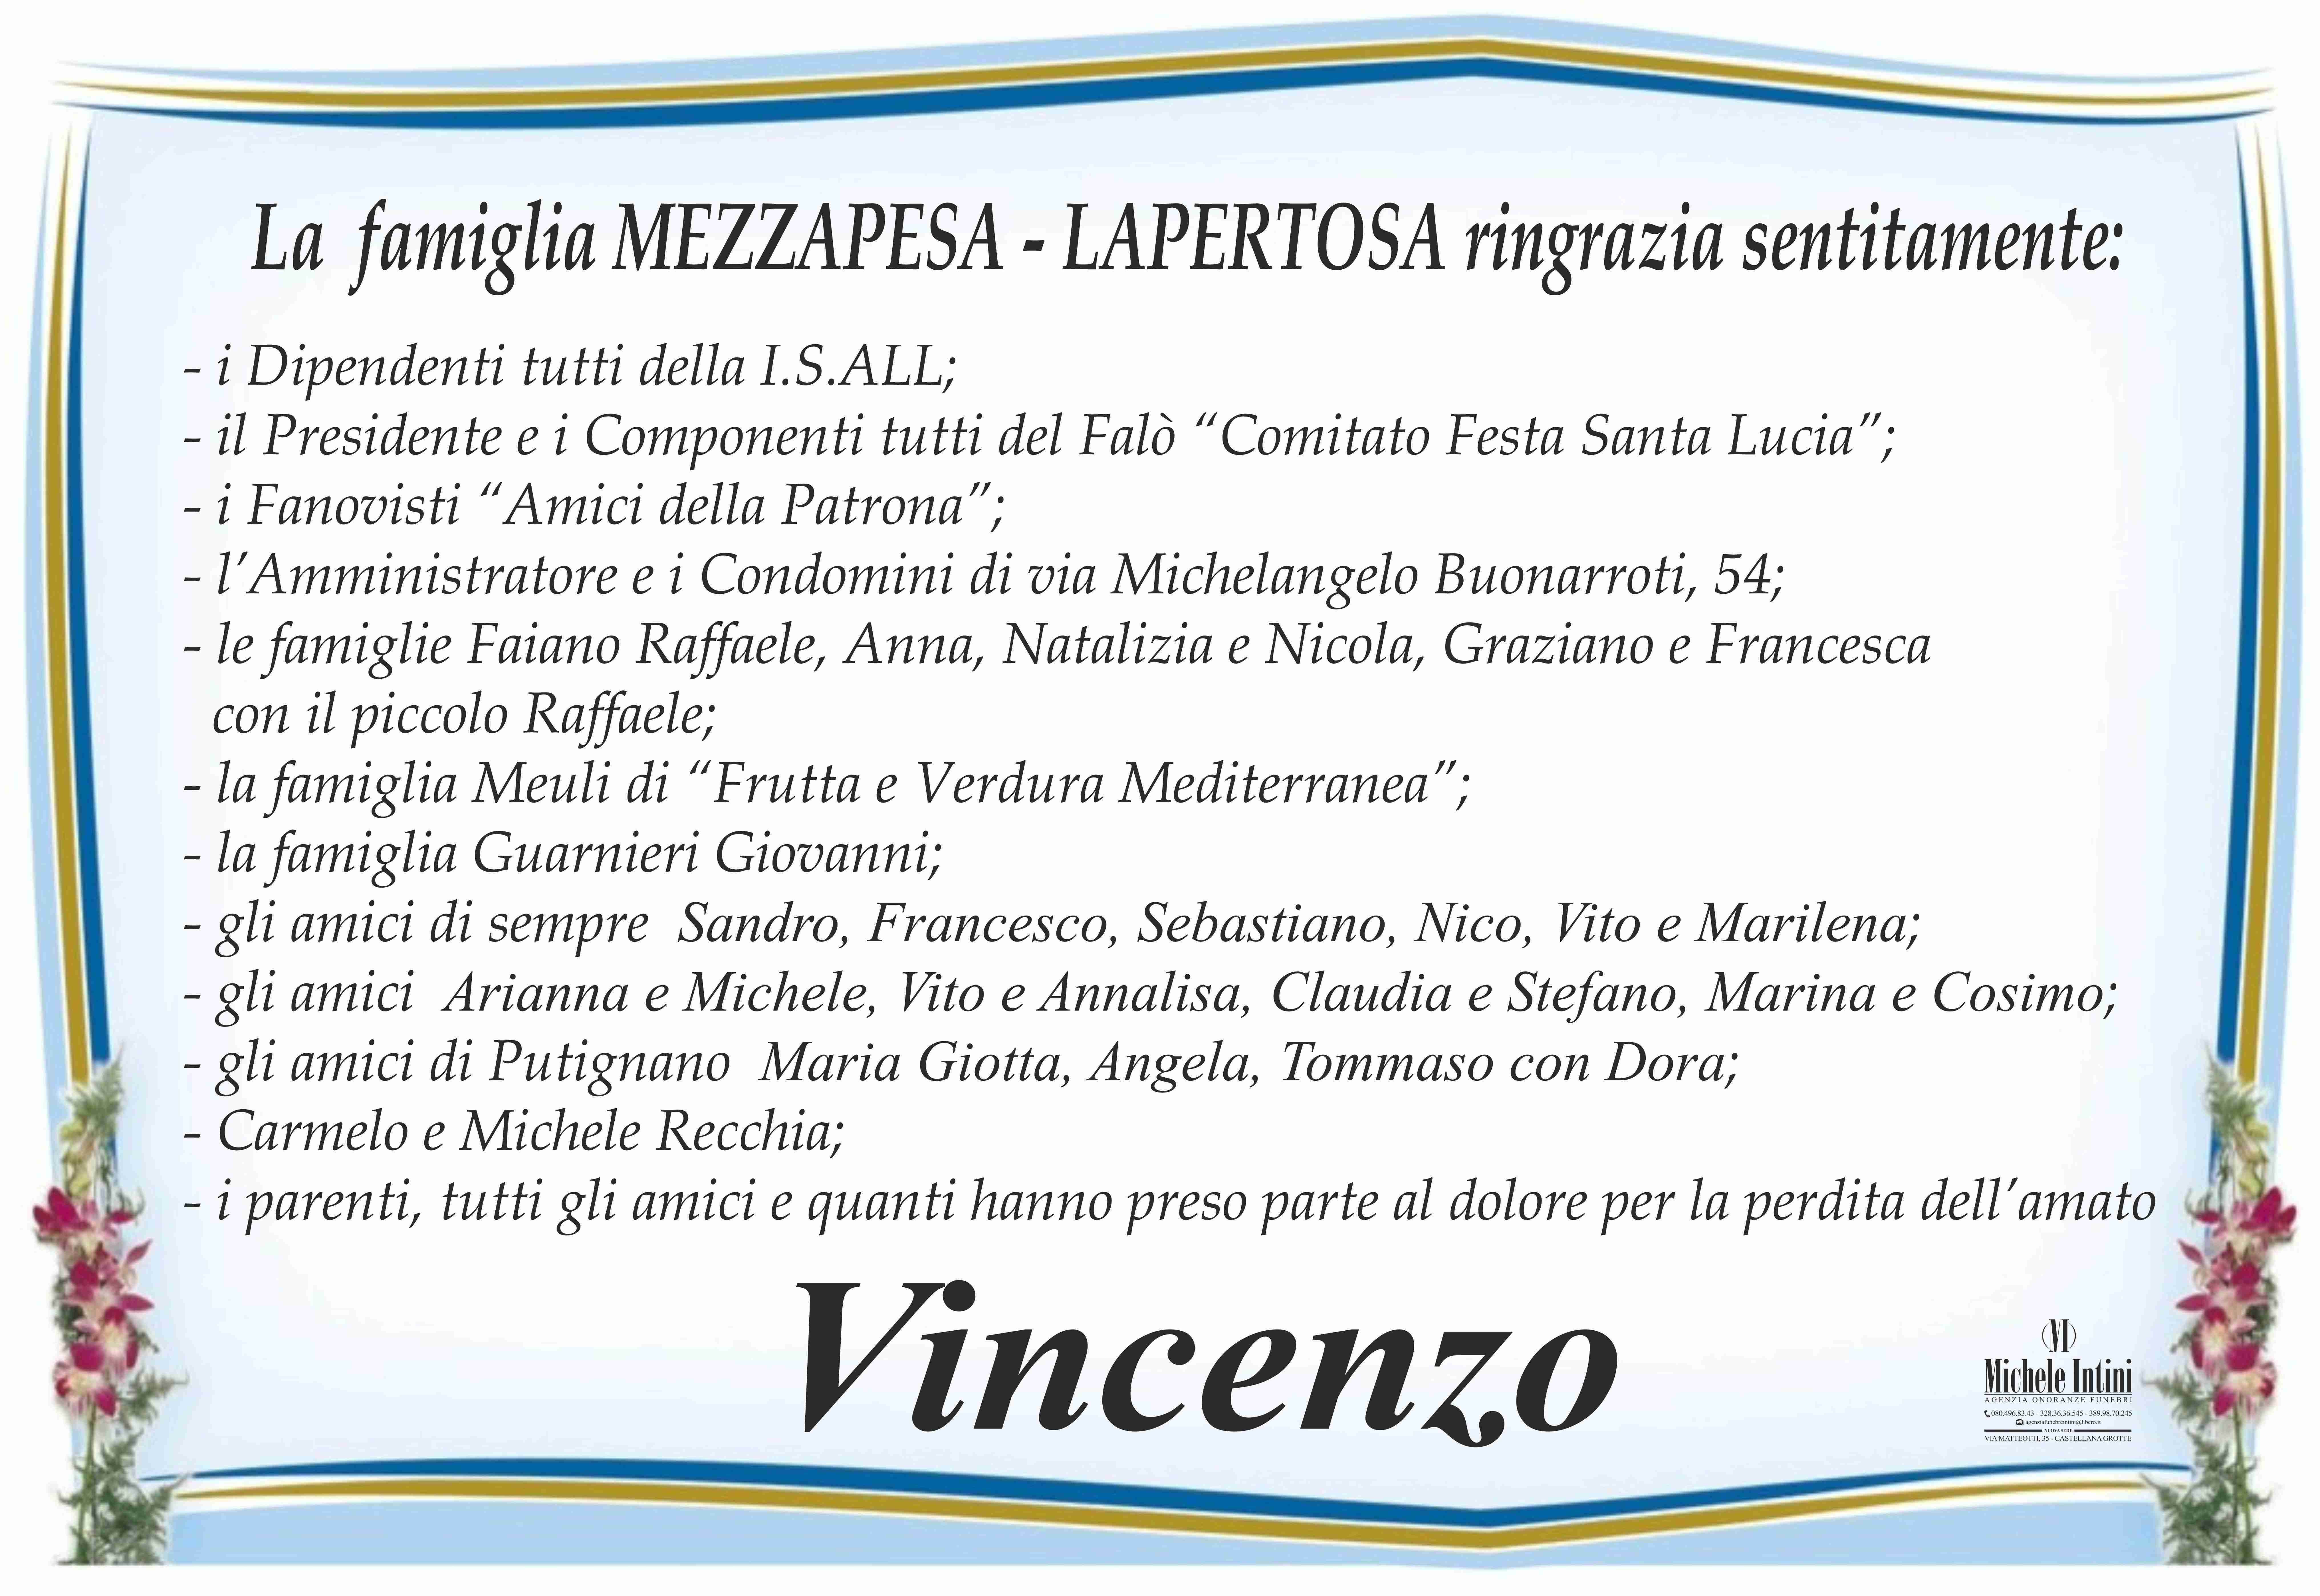 Vincenzo Mezzapesa